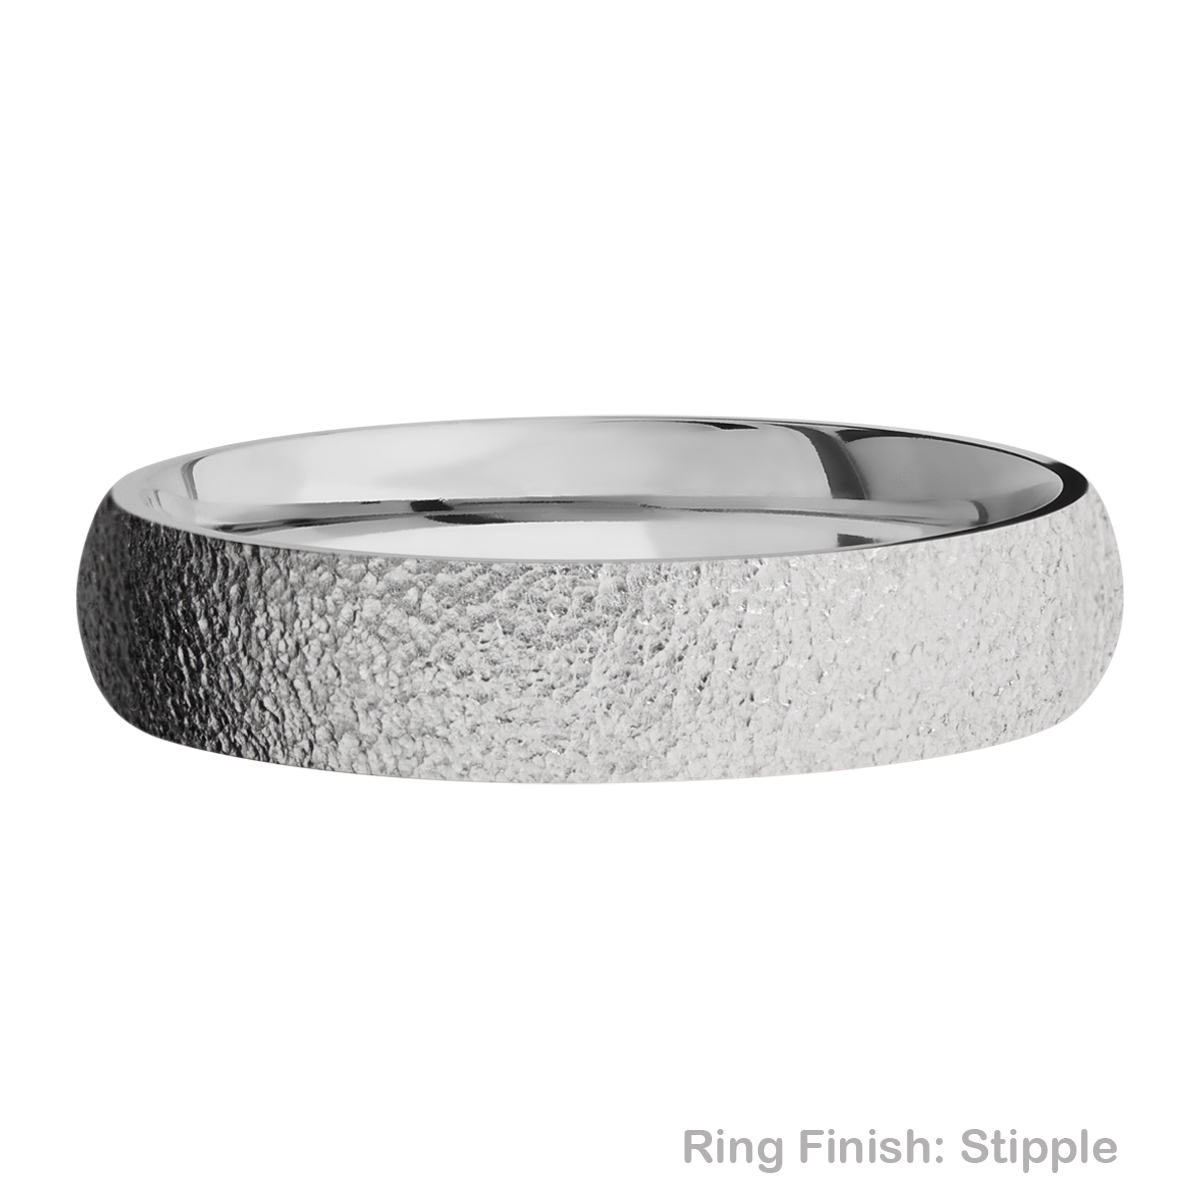 Lashbrook CC5D Cobalt Chrome Wedding Ring or Band